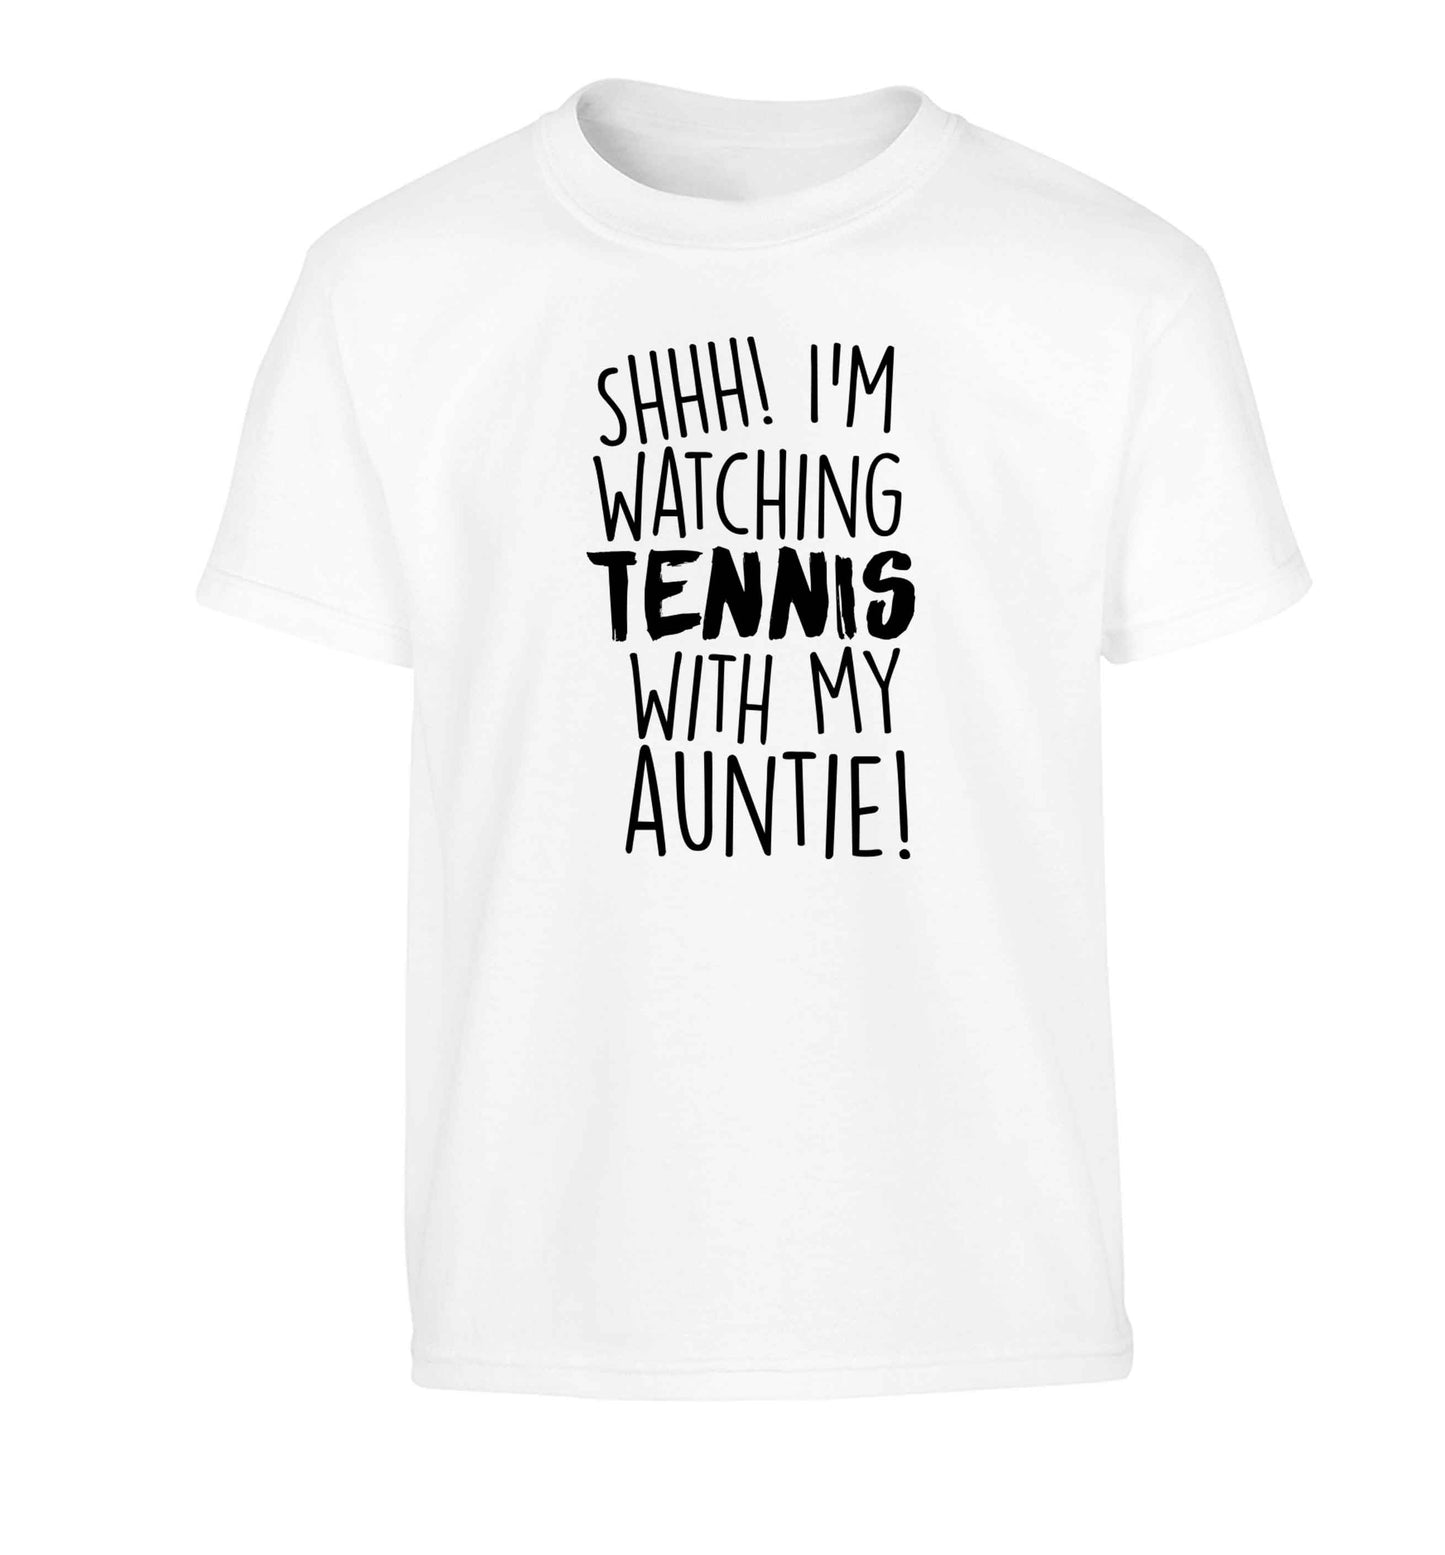 Shh! I'm watching tennis with my auntie! Children's white Tshirt 12-13 Years